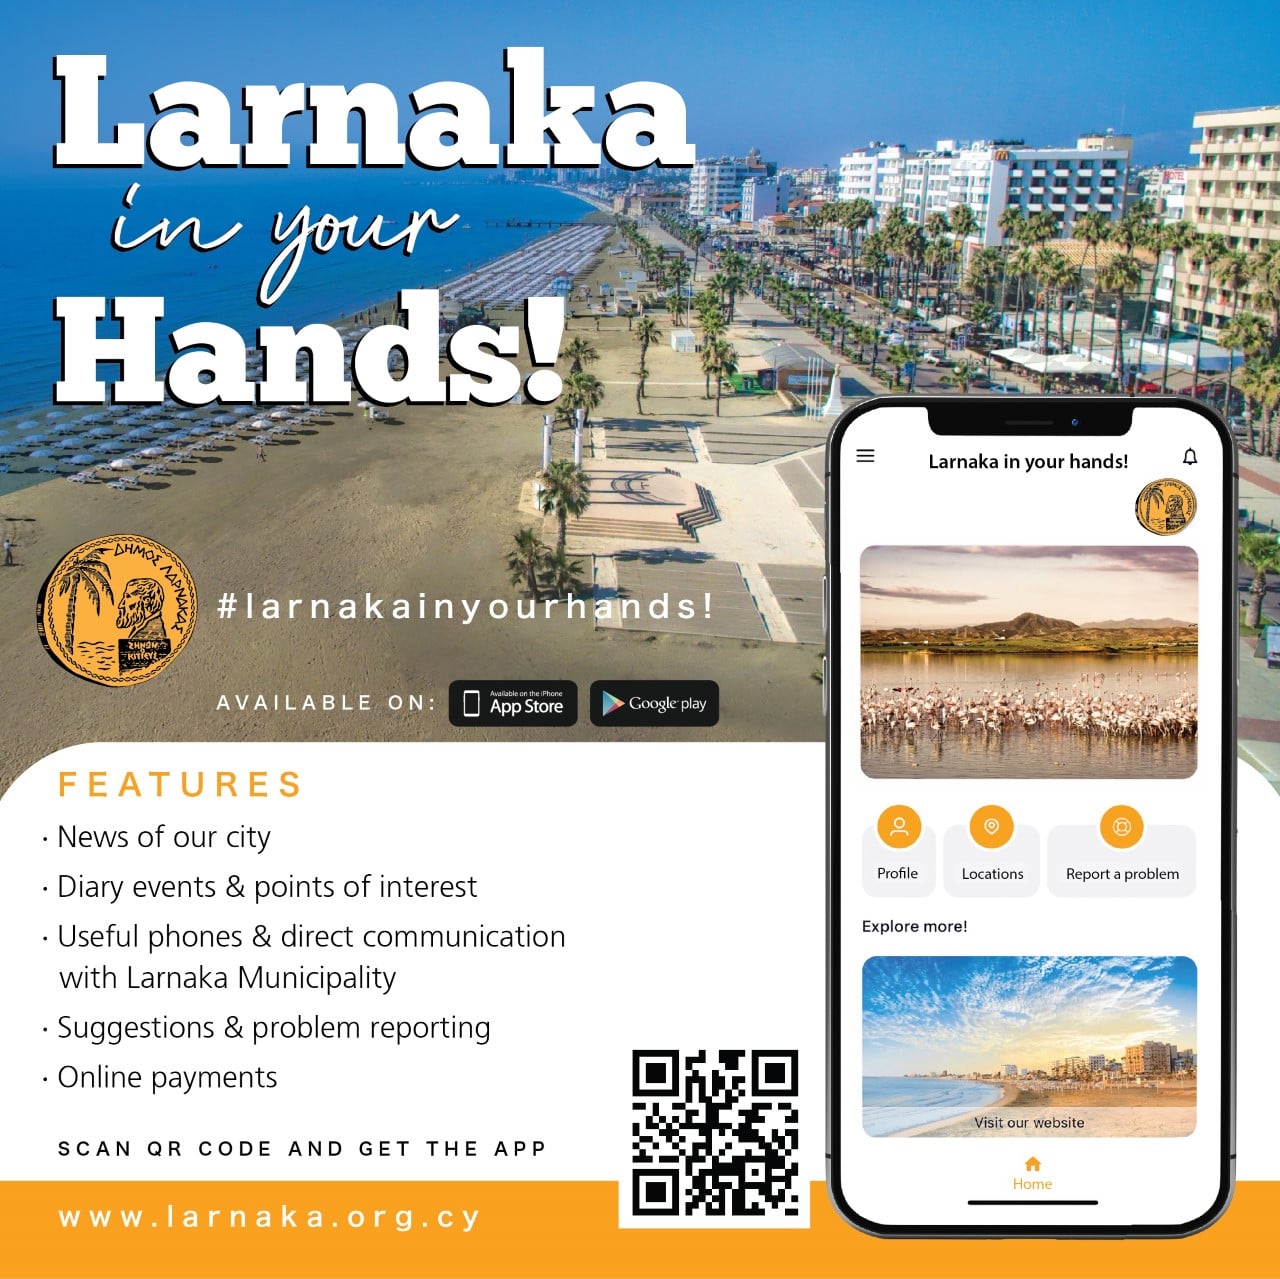 Larnaka in your hands